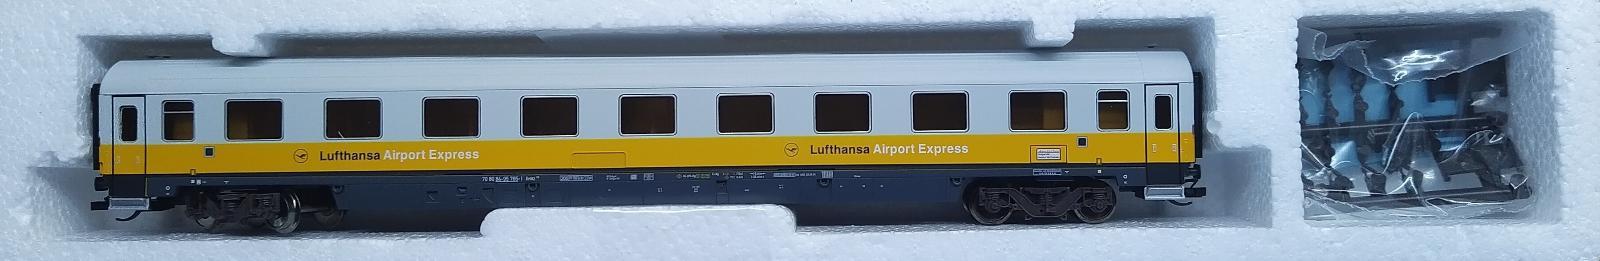 Rychlíkový vůz Airport Express, TILLIG 13540 Lufthansa, TT 1:120 (01)